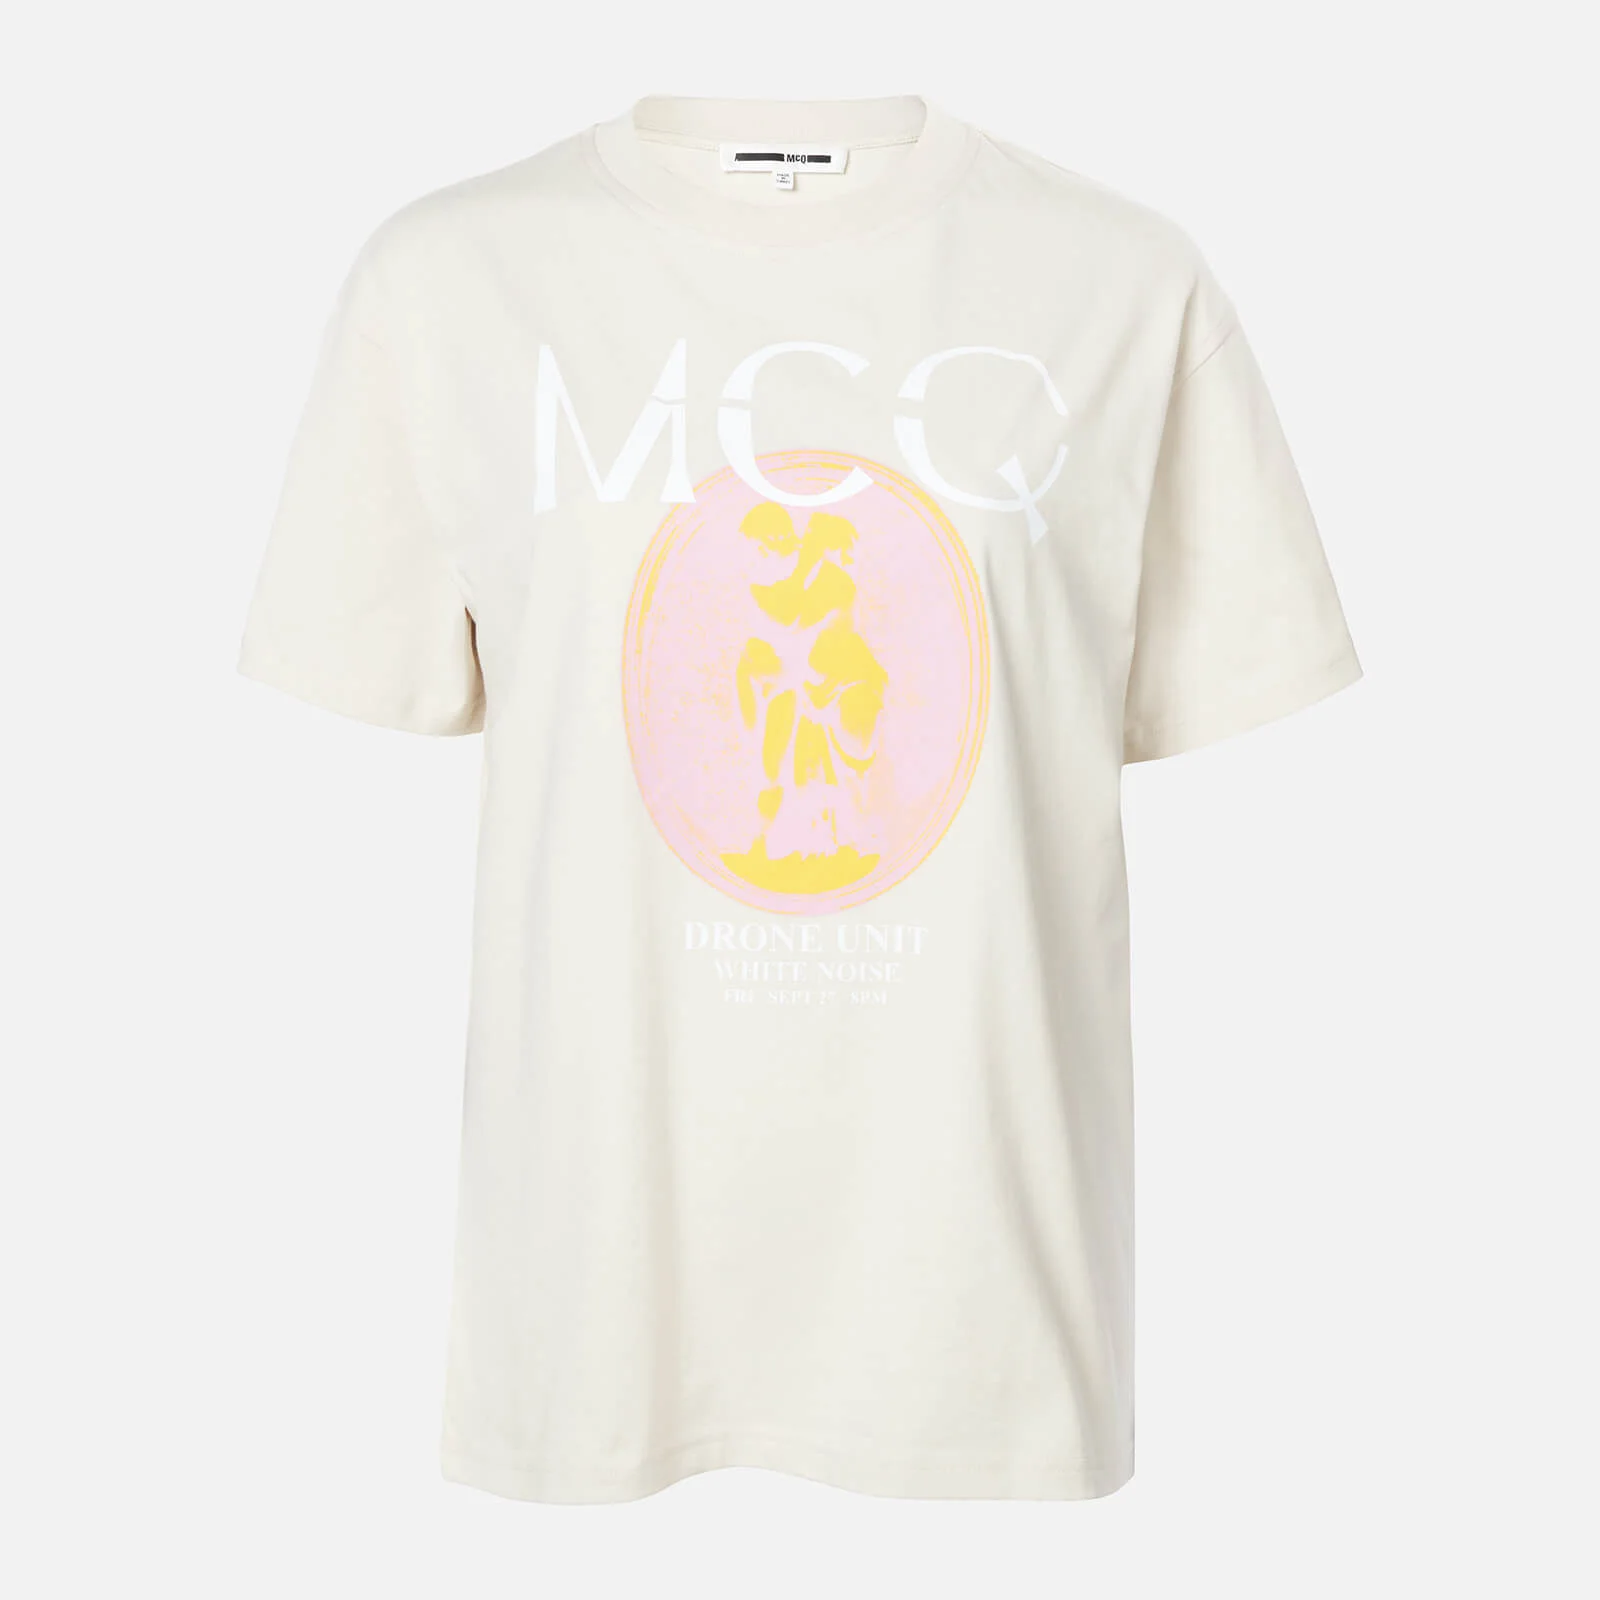 McQ Alexander McQueen Women's Boyfriend T-Shirt - Grey Rain Image 1